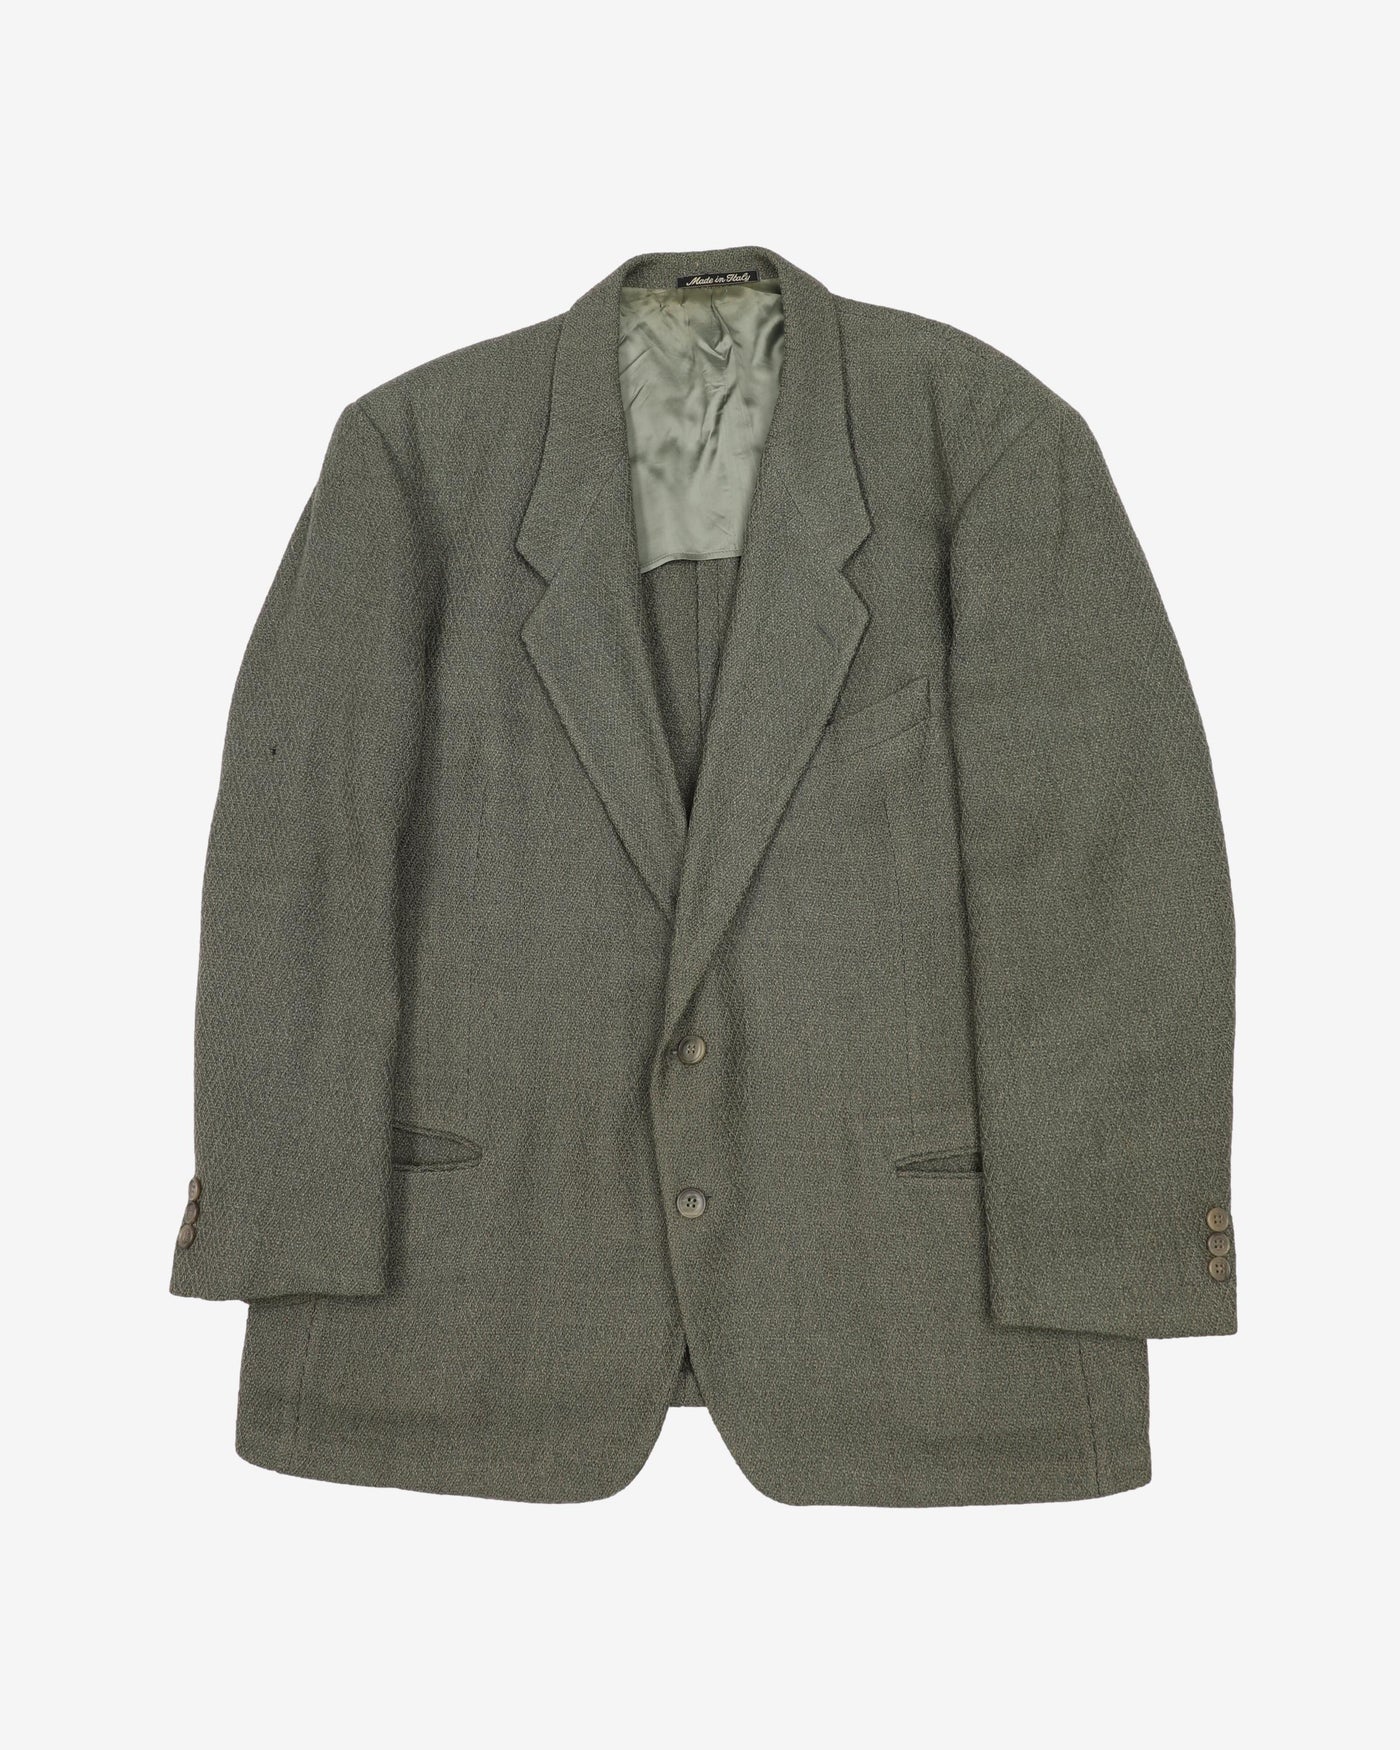 Georgio Armani Green Blazer Jacket - XL